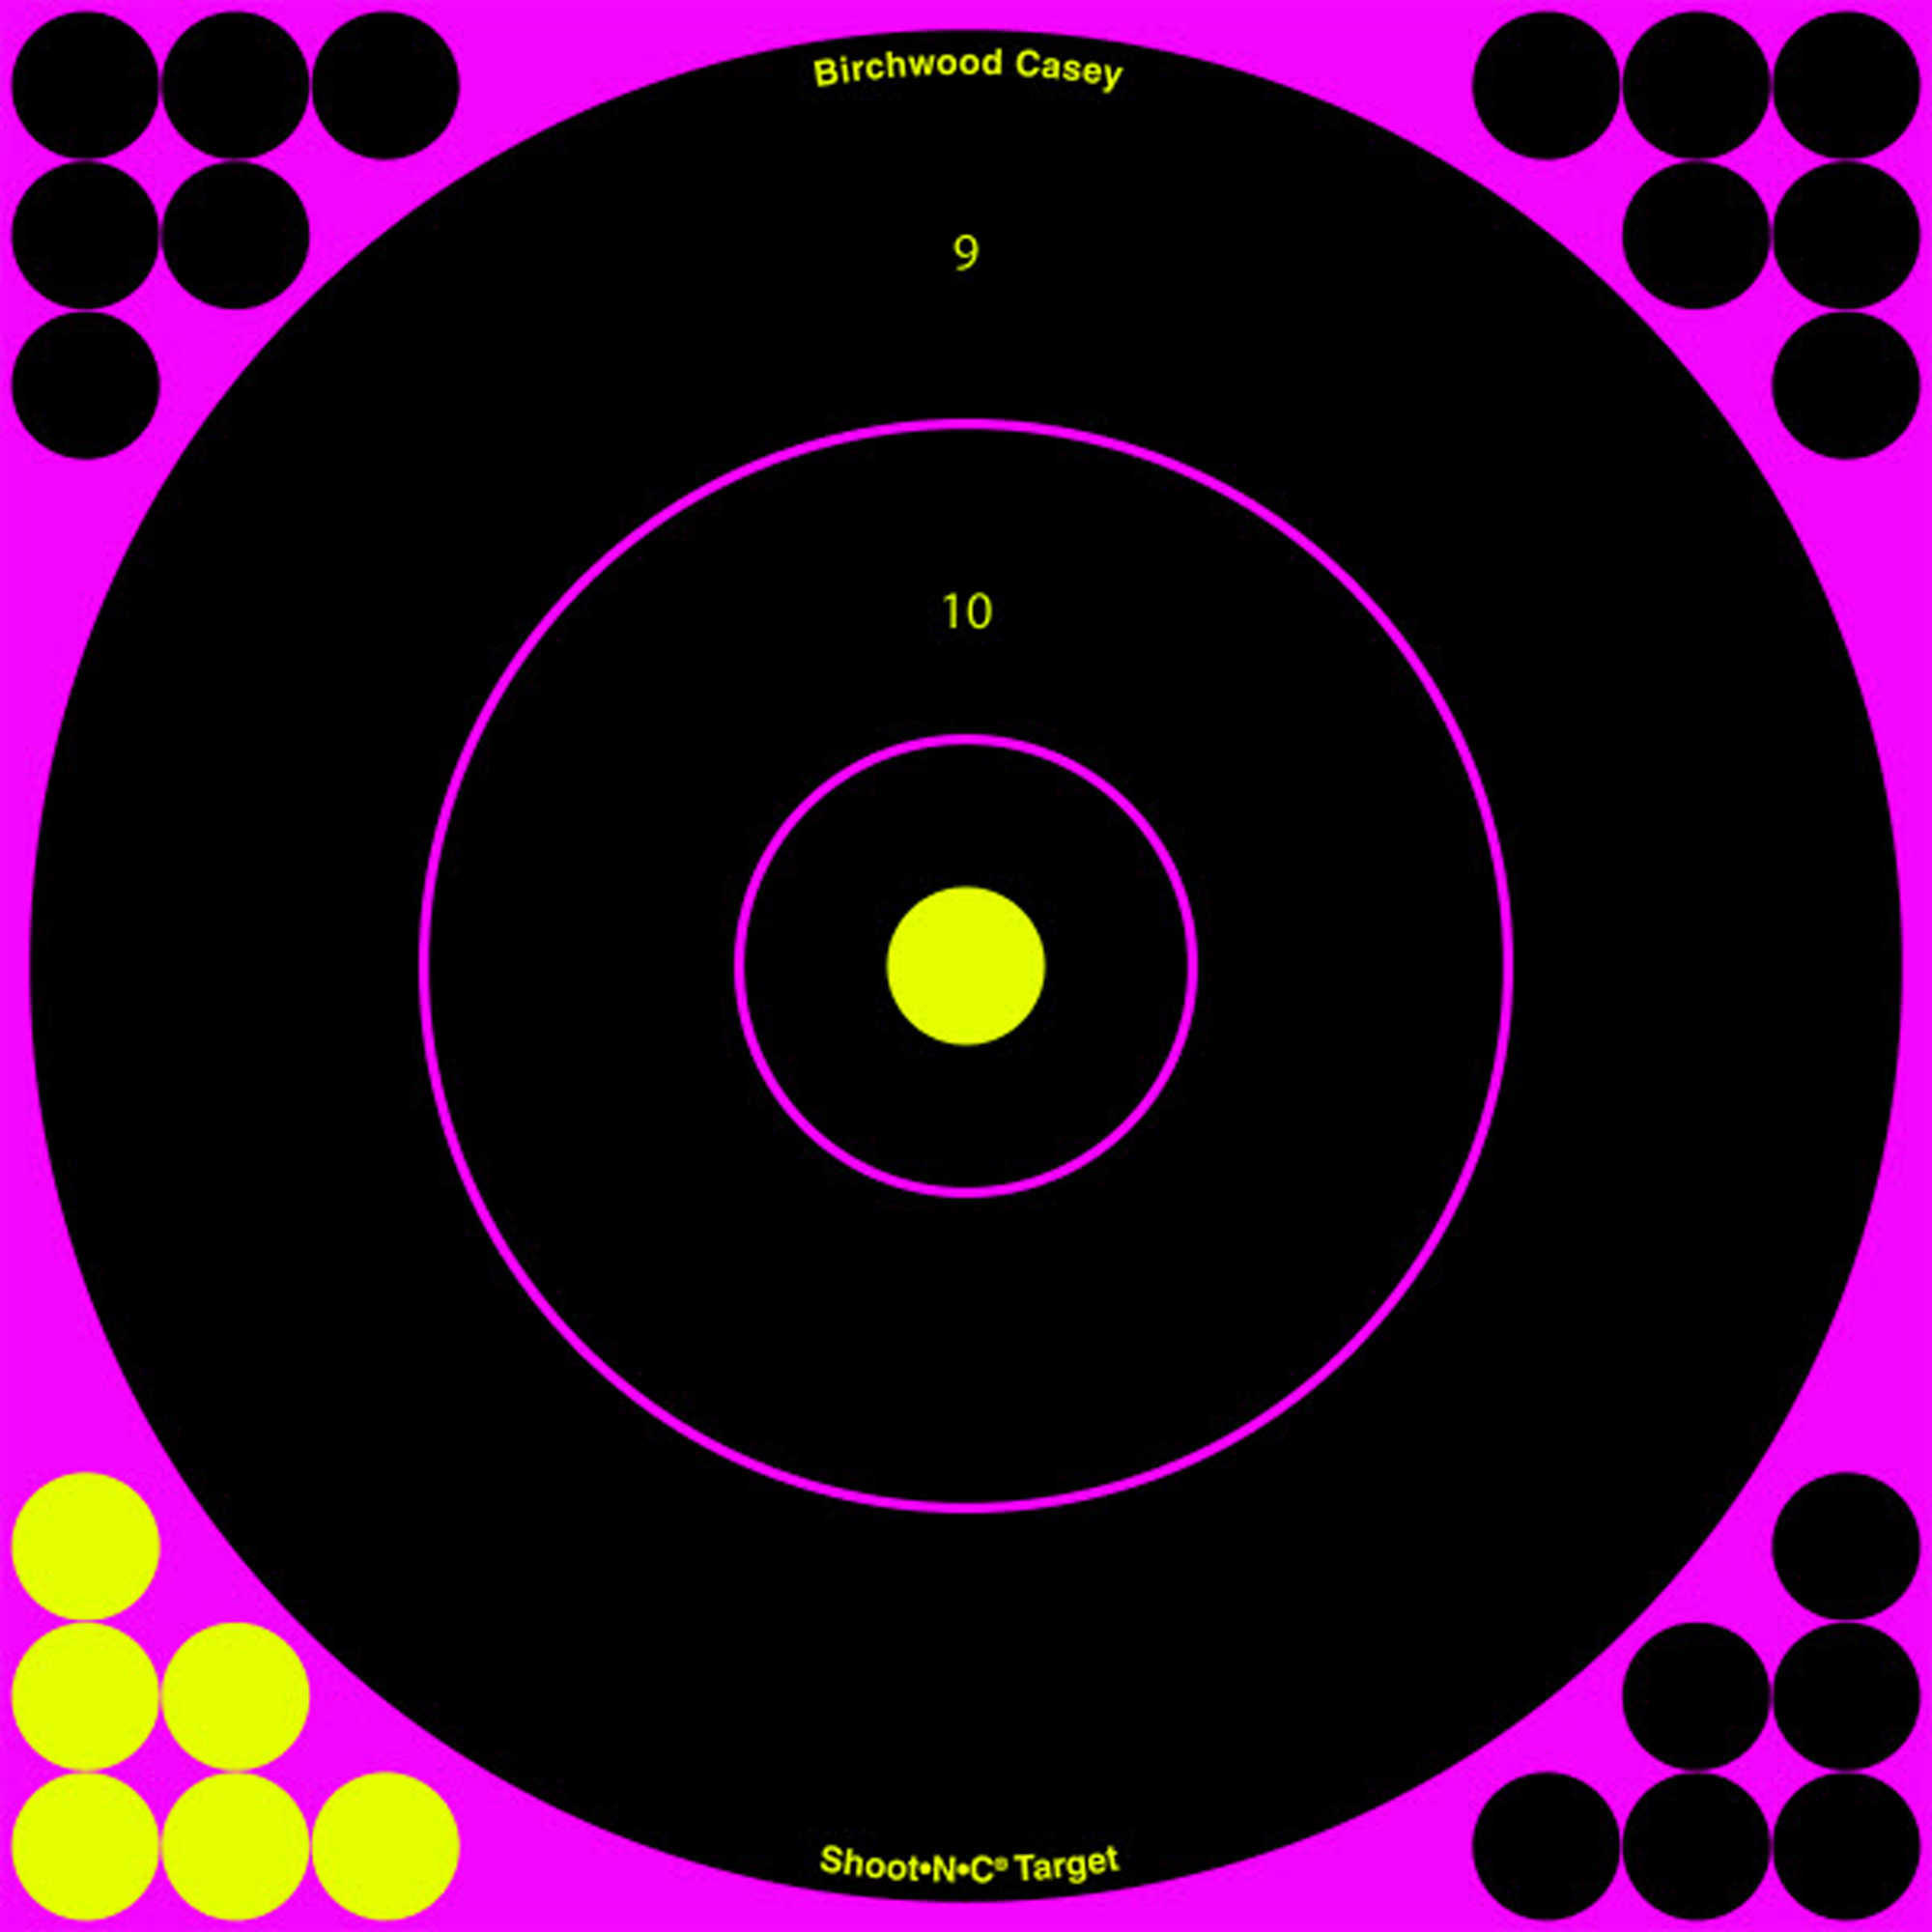 Birchwood Casey Shoot-N-C Target Round Bullseye 12" 5 Targets 34027